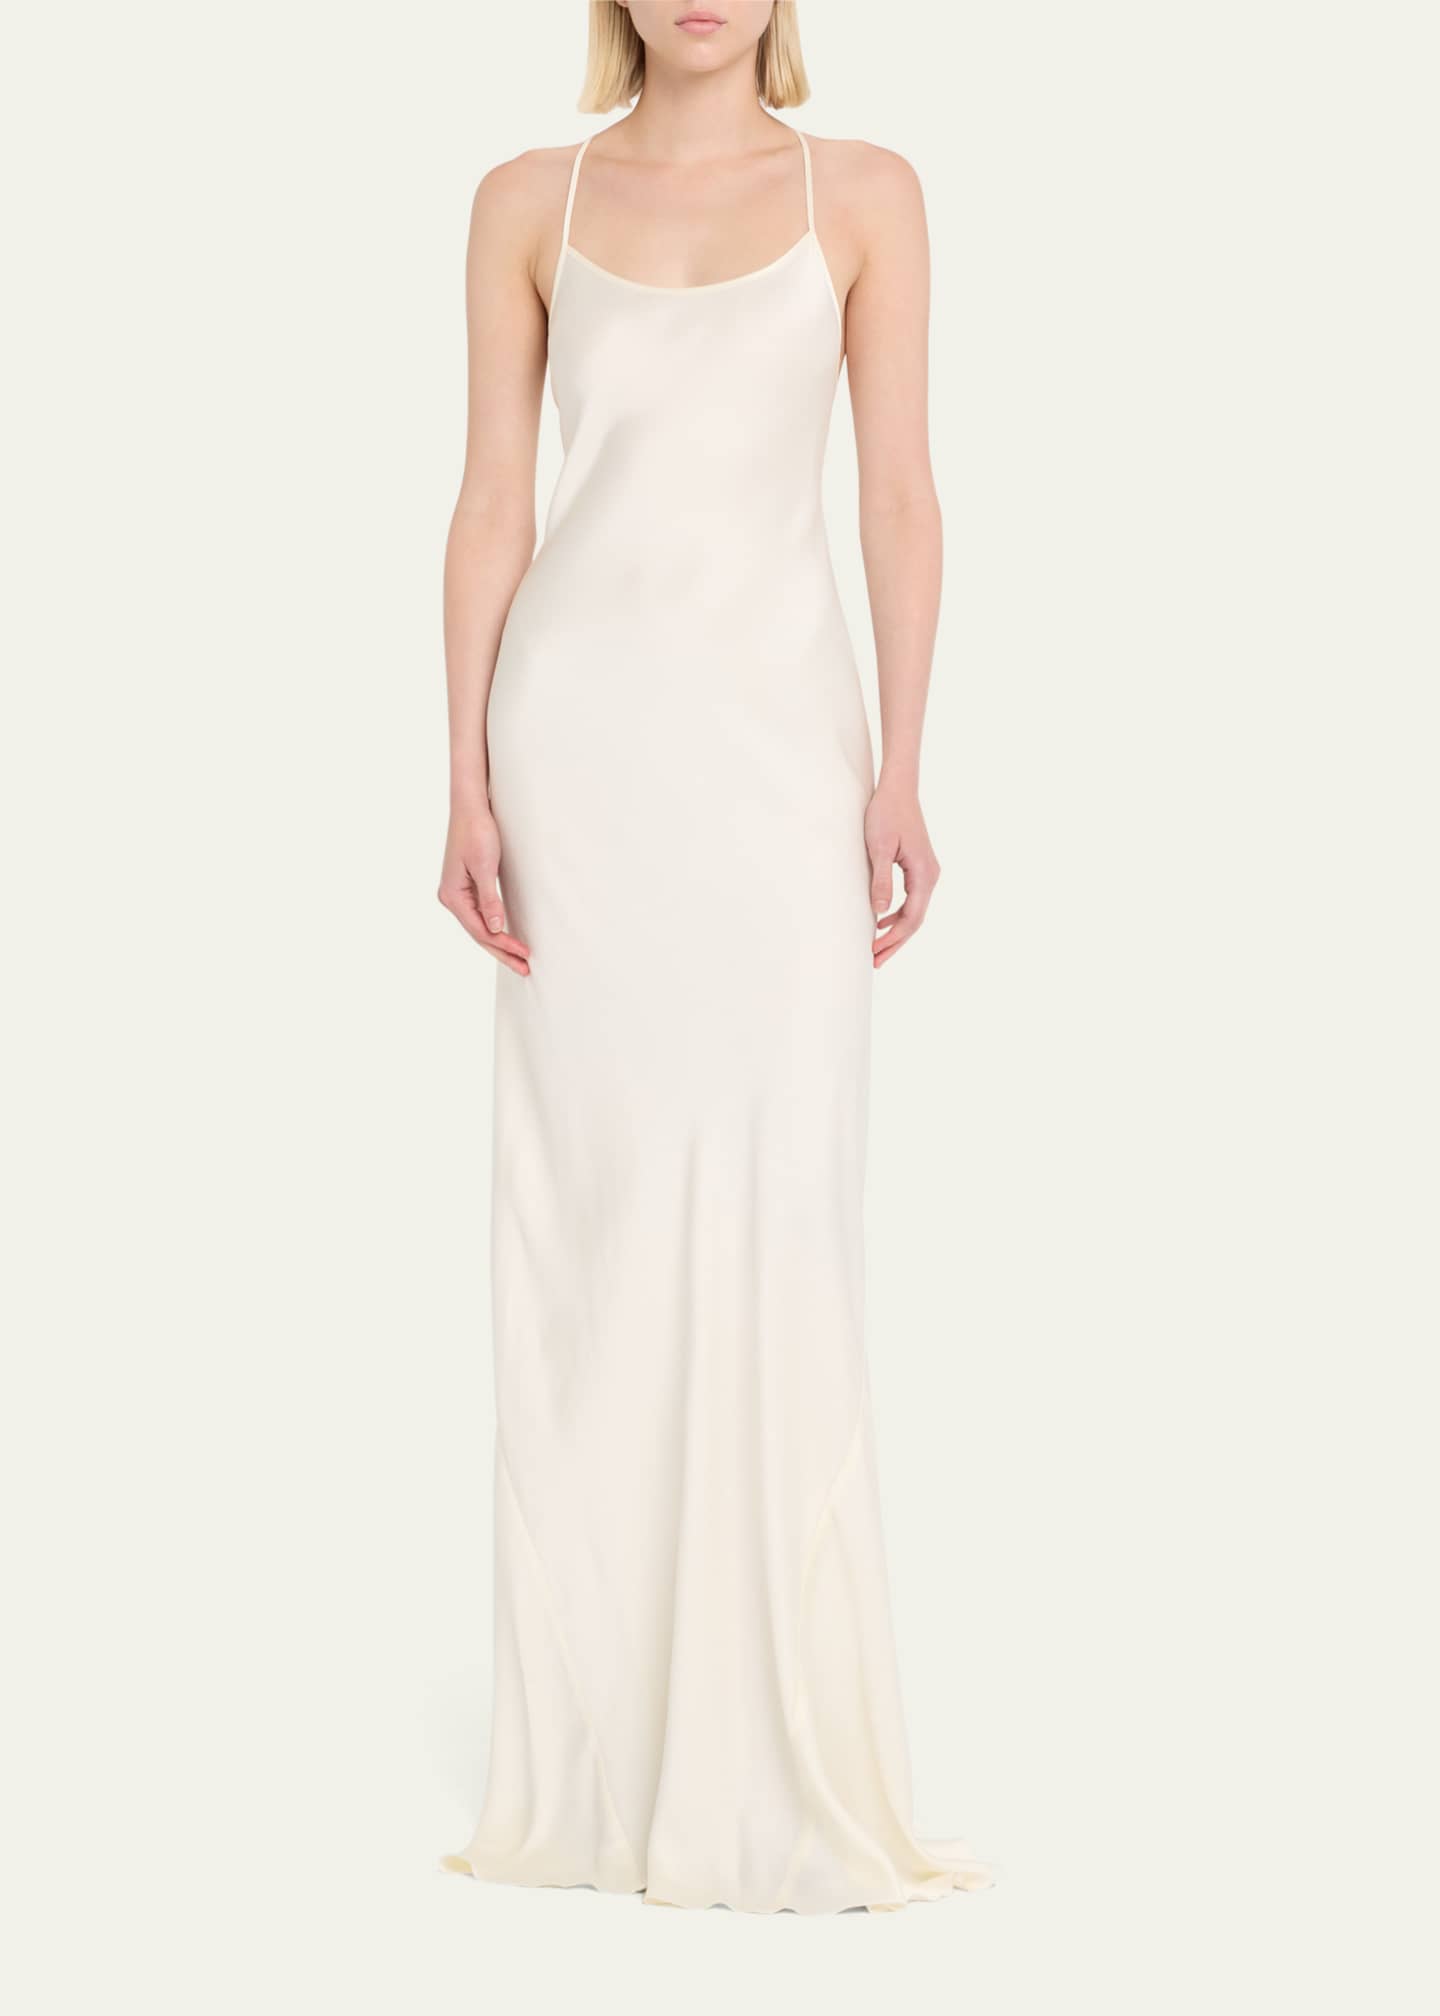 Victoria Beckham Cami Floor Length Gown - Bergdorf Goodman